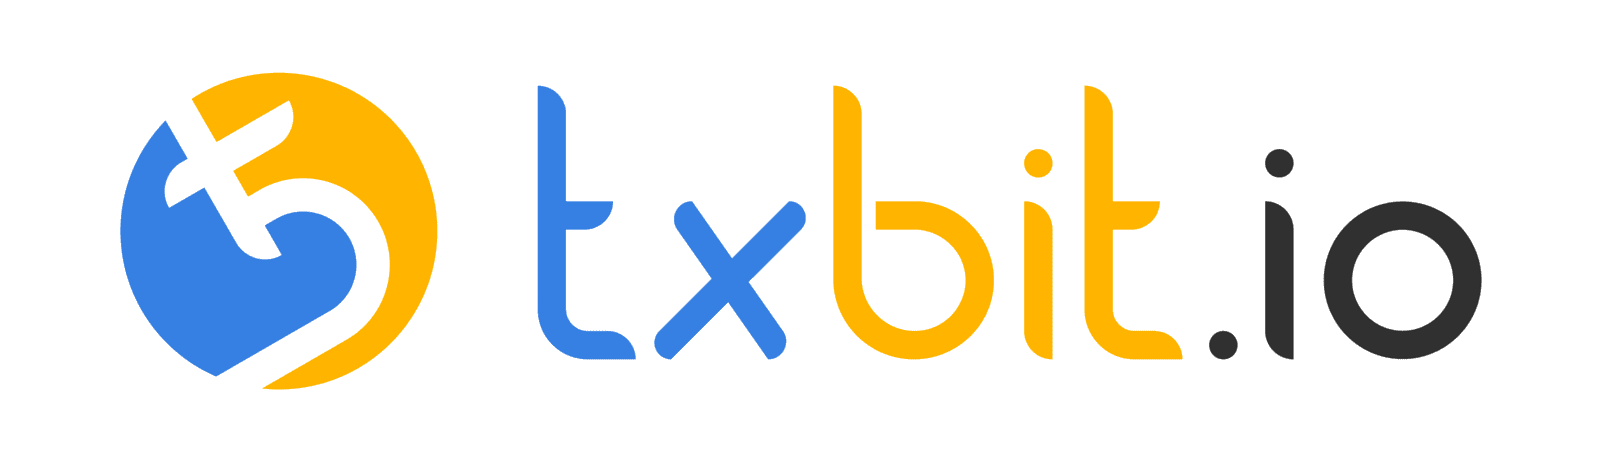 Txbit